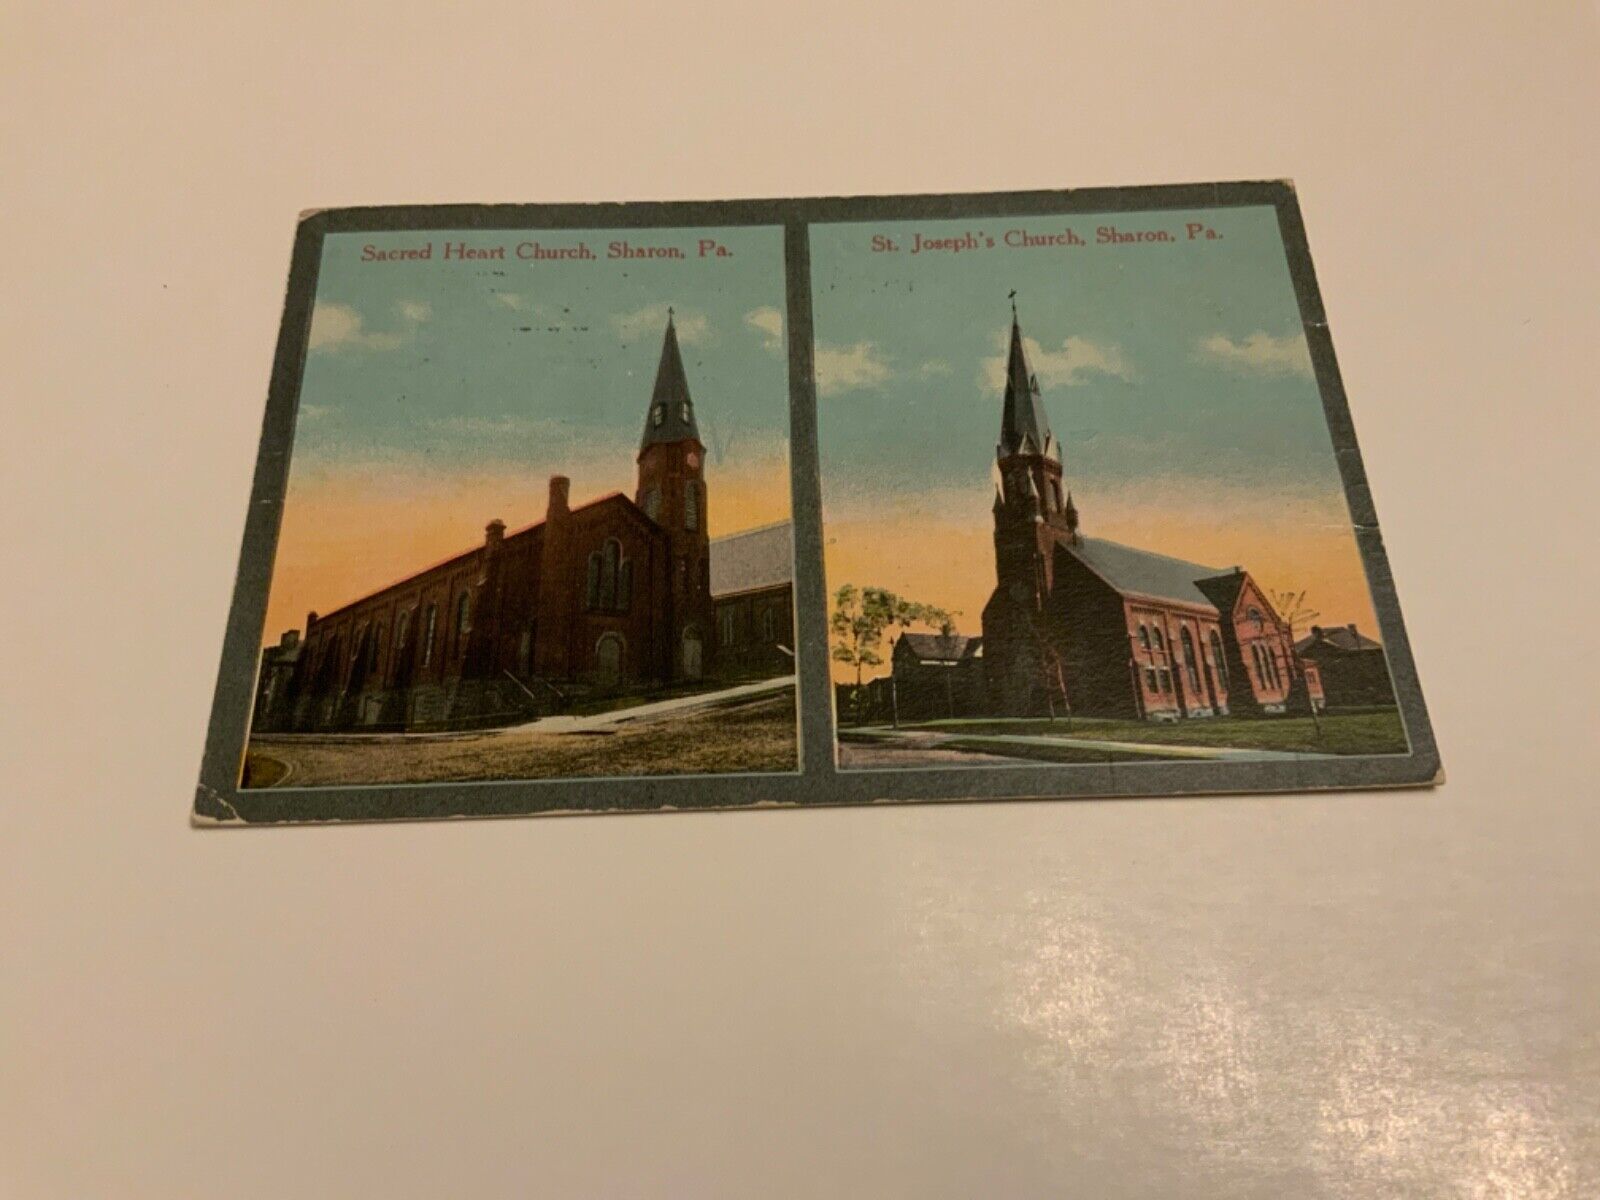 Sharon, Pa. ~ Sacred Heart and St. Joseph’s Churches - 1914 Antique Postcard